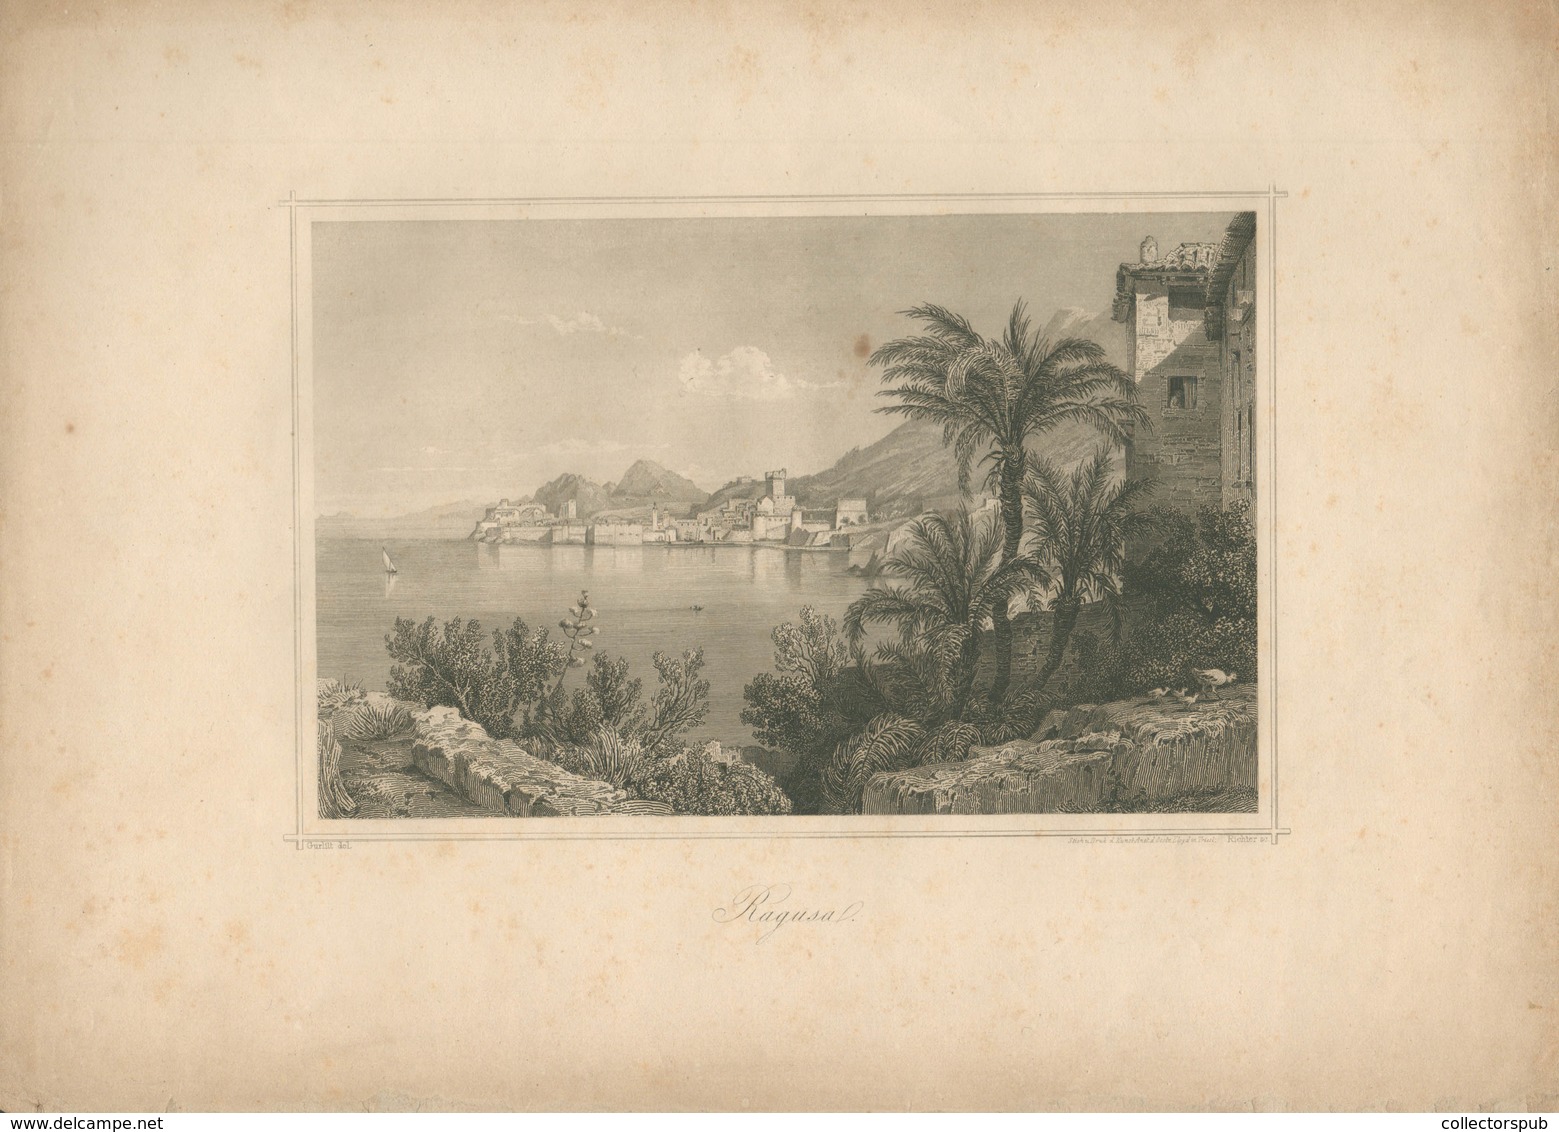 RAGUSA Acélmetszet , Biermann  1850-60. Ca.  Képméret 19*13 Cm - Estampes & Gravures